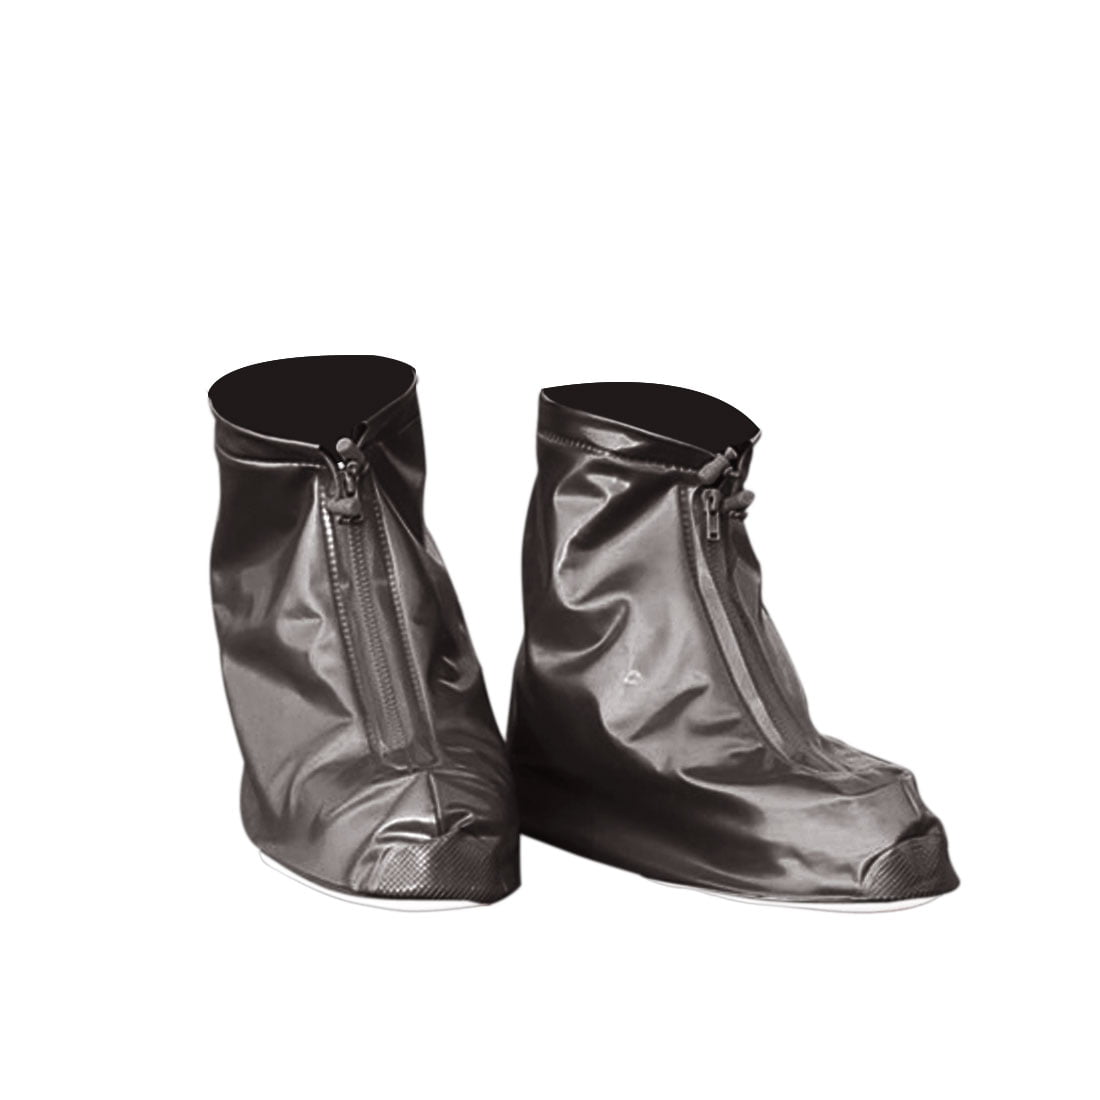 Sourcingmap® 1 Pair Pink Size L Unisex PVC Anti-slip Reusable Waterproof Rain Shoes Cover Guard Overshoes Protection 